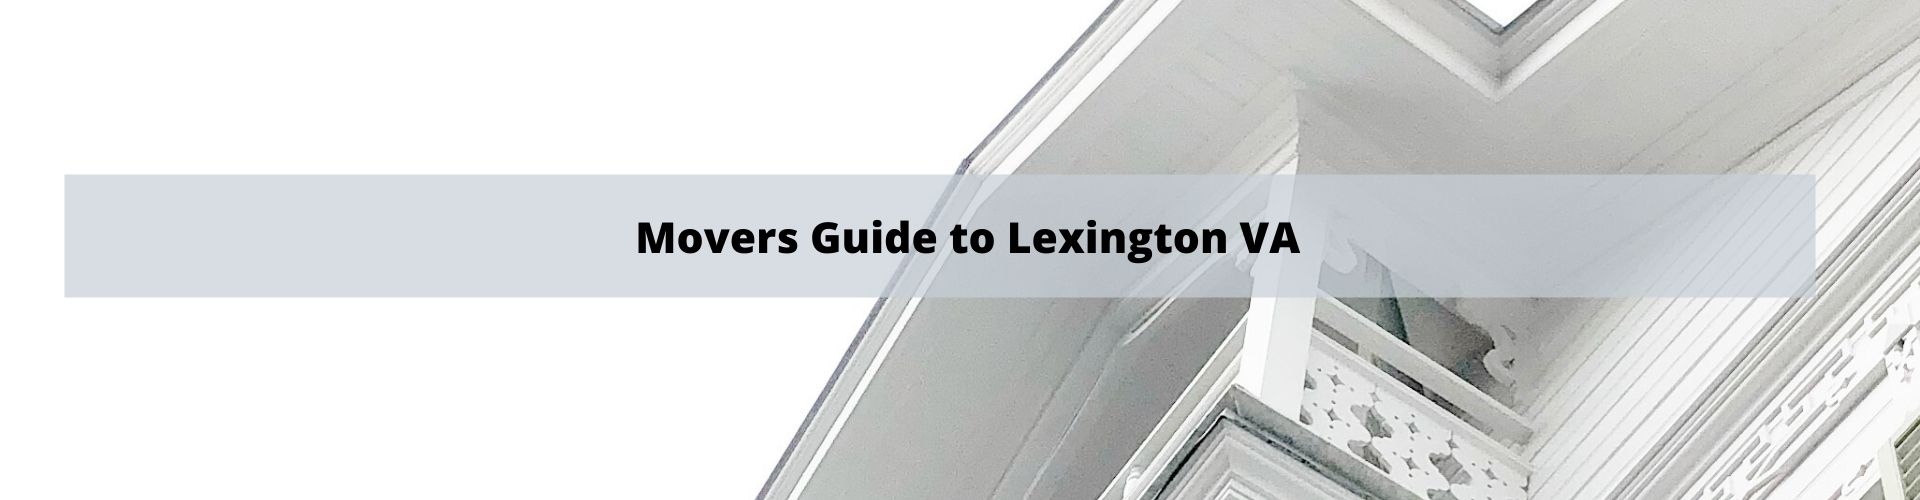 Mover's Guide to Lexington VA